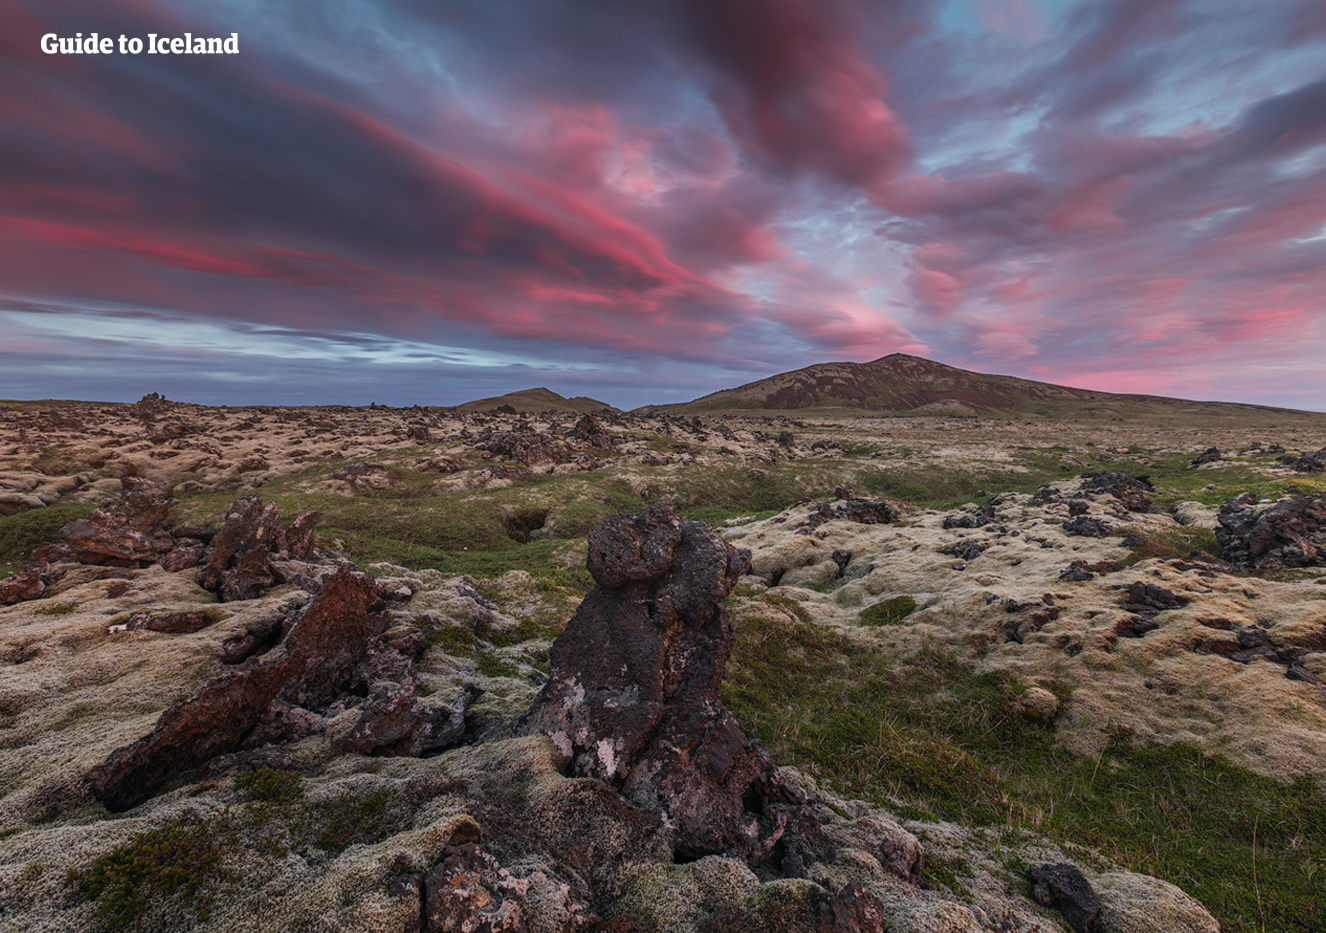 Beserkjahraun is a lava field with a dark history.